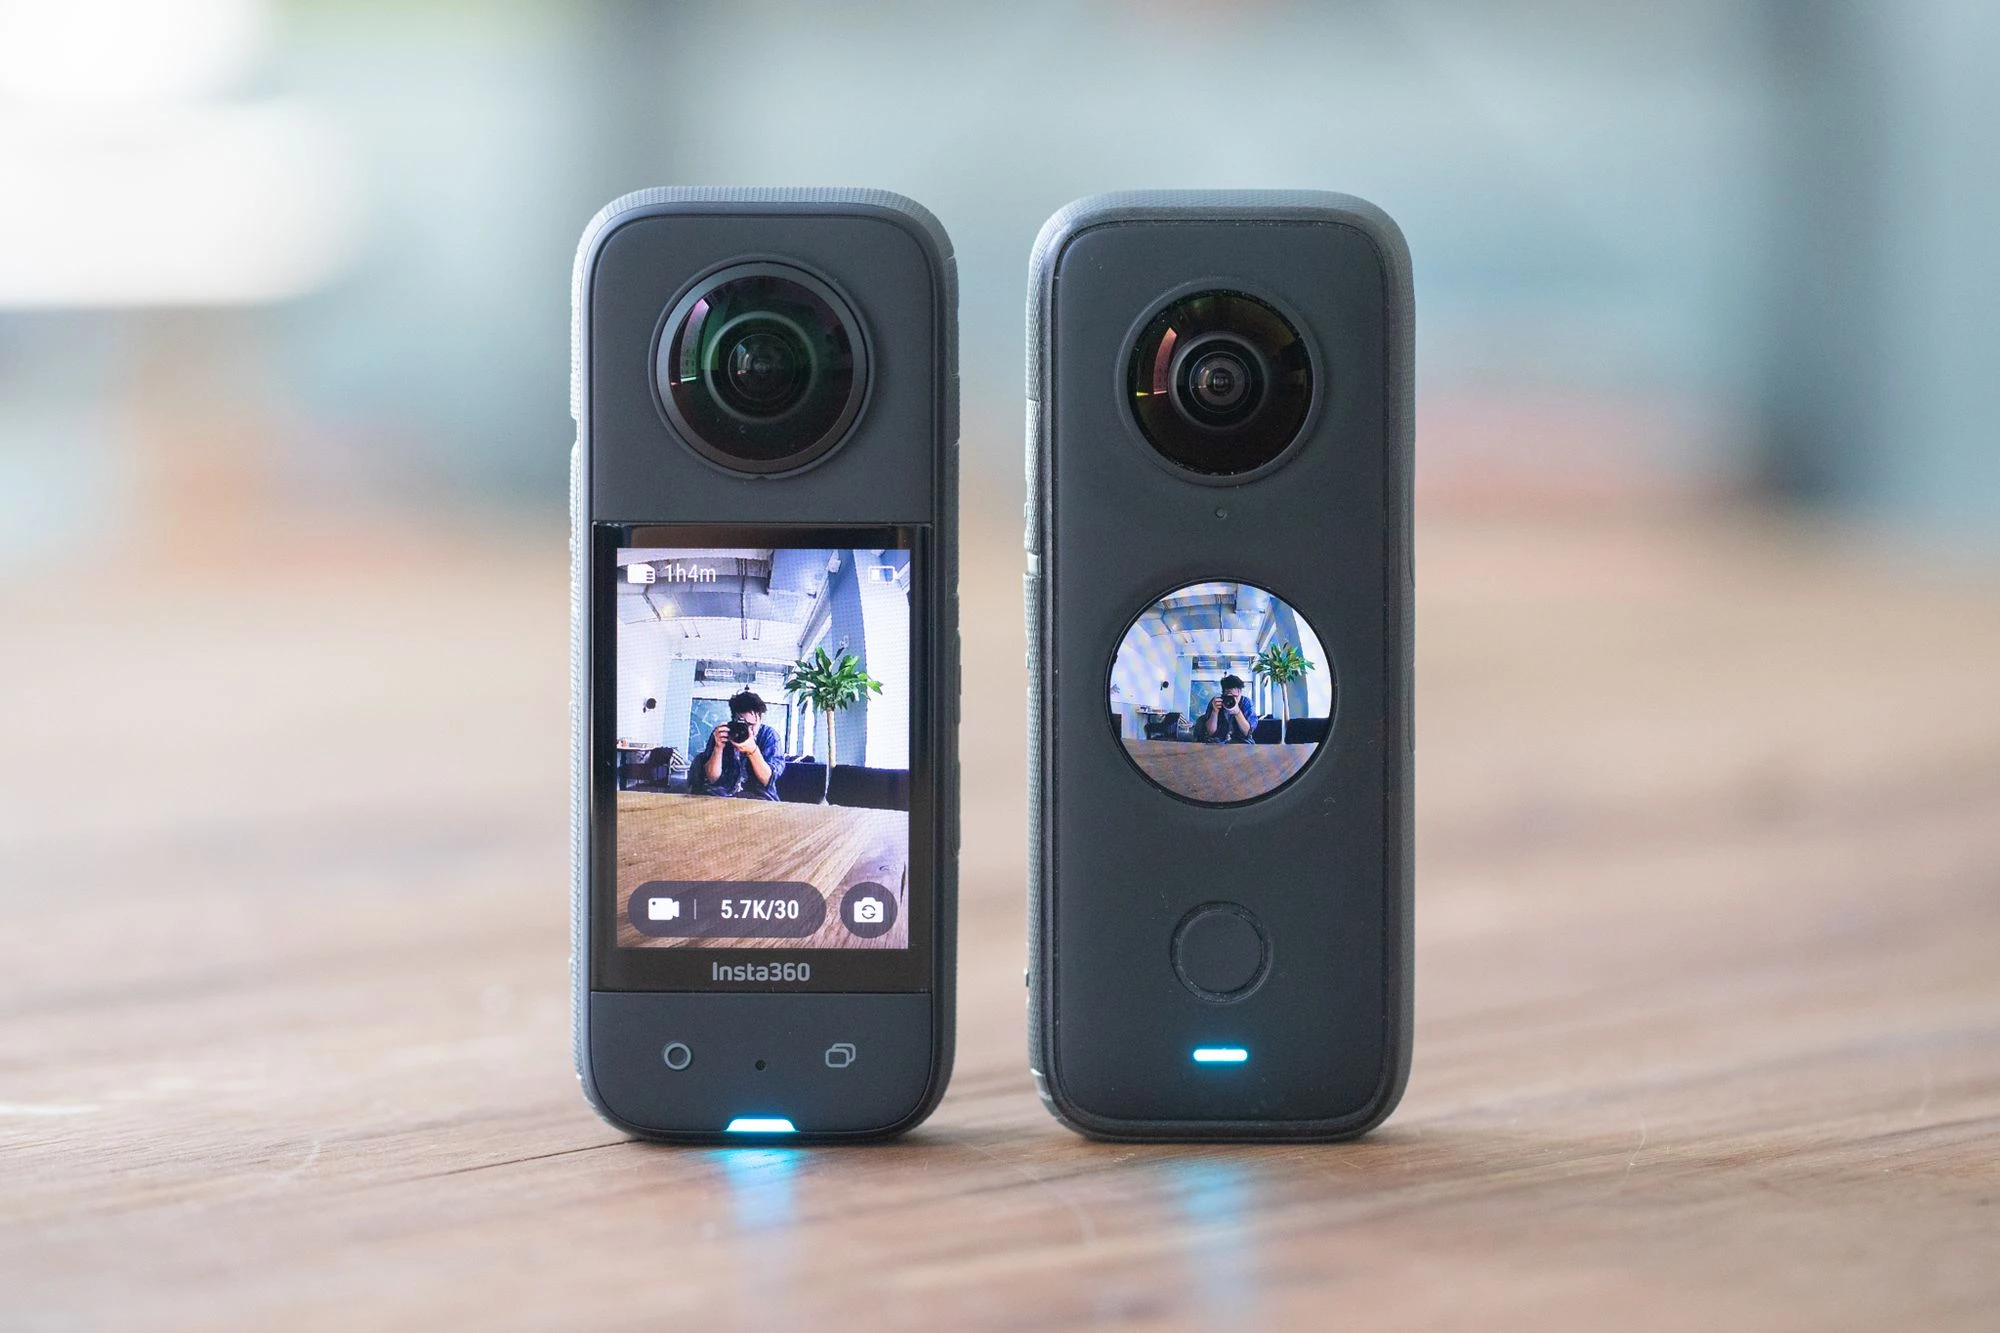 Insta360 telah merilis pembaruan firmware baru untuk kamera aksi X3 andalannya yang menambahkan mode pra-perekaman baru, yang memungkinkan pengguna untuk menangkap rekaman sebelum benar-benar memulai perekaman, selain opsi frekuensi gambar yang diperluas.